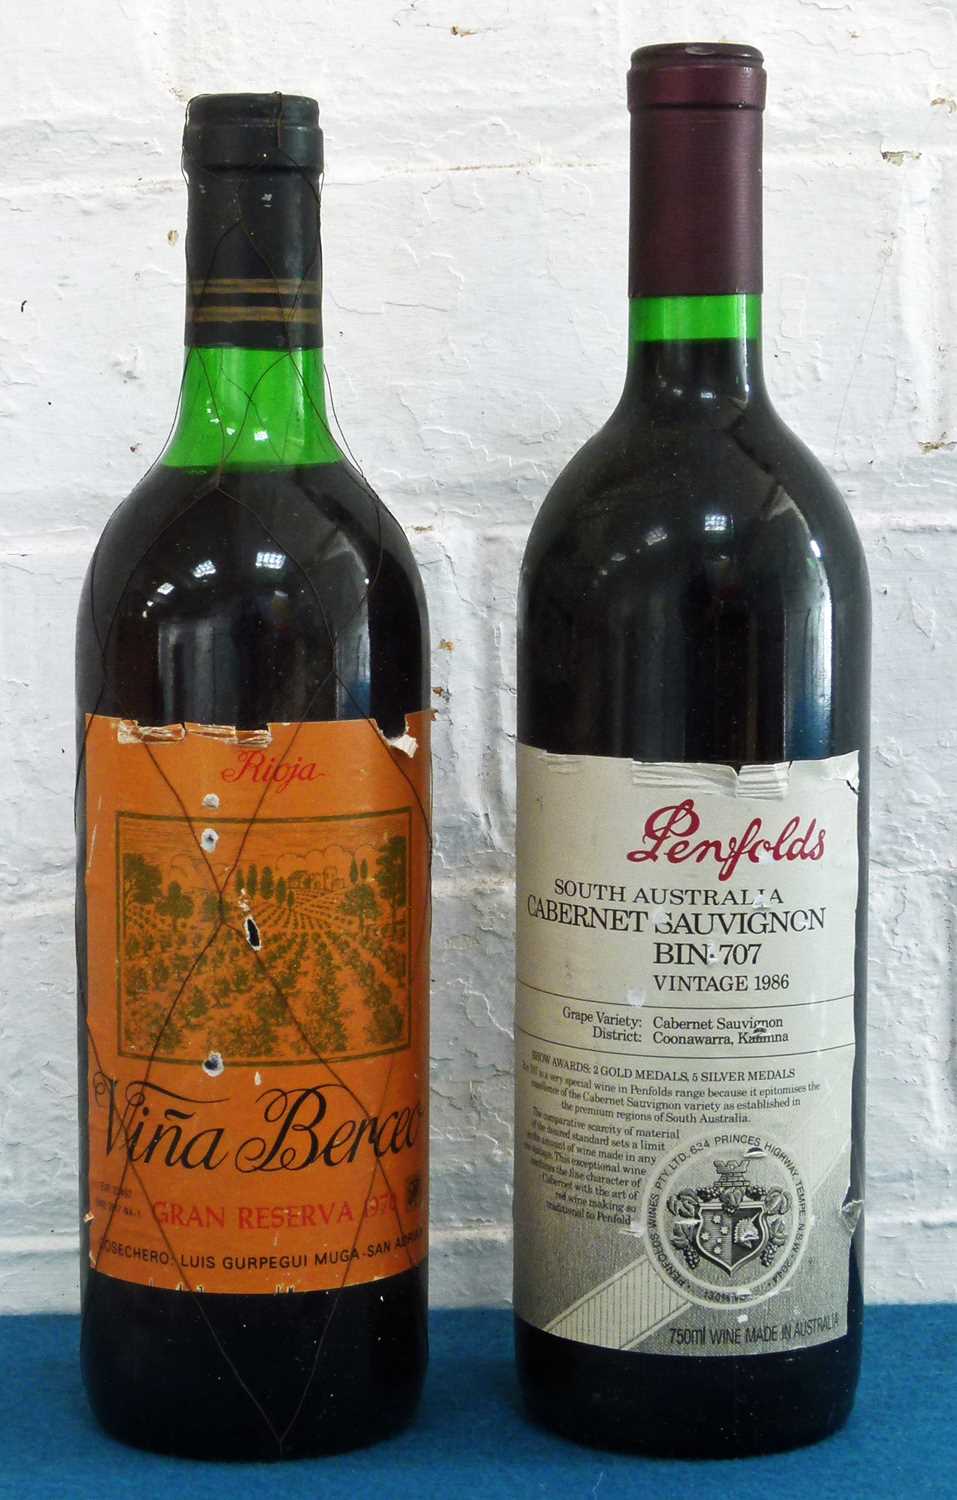 Lot 41 - 2 Bottles Mixed Lot Penfolds Bin 707 and Gran Reserva Rioja